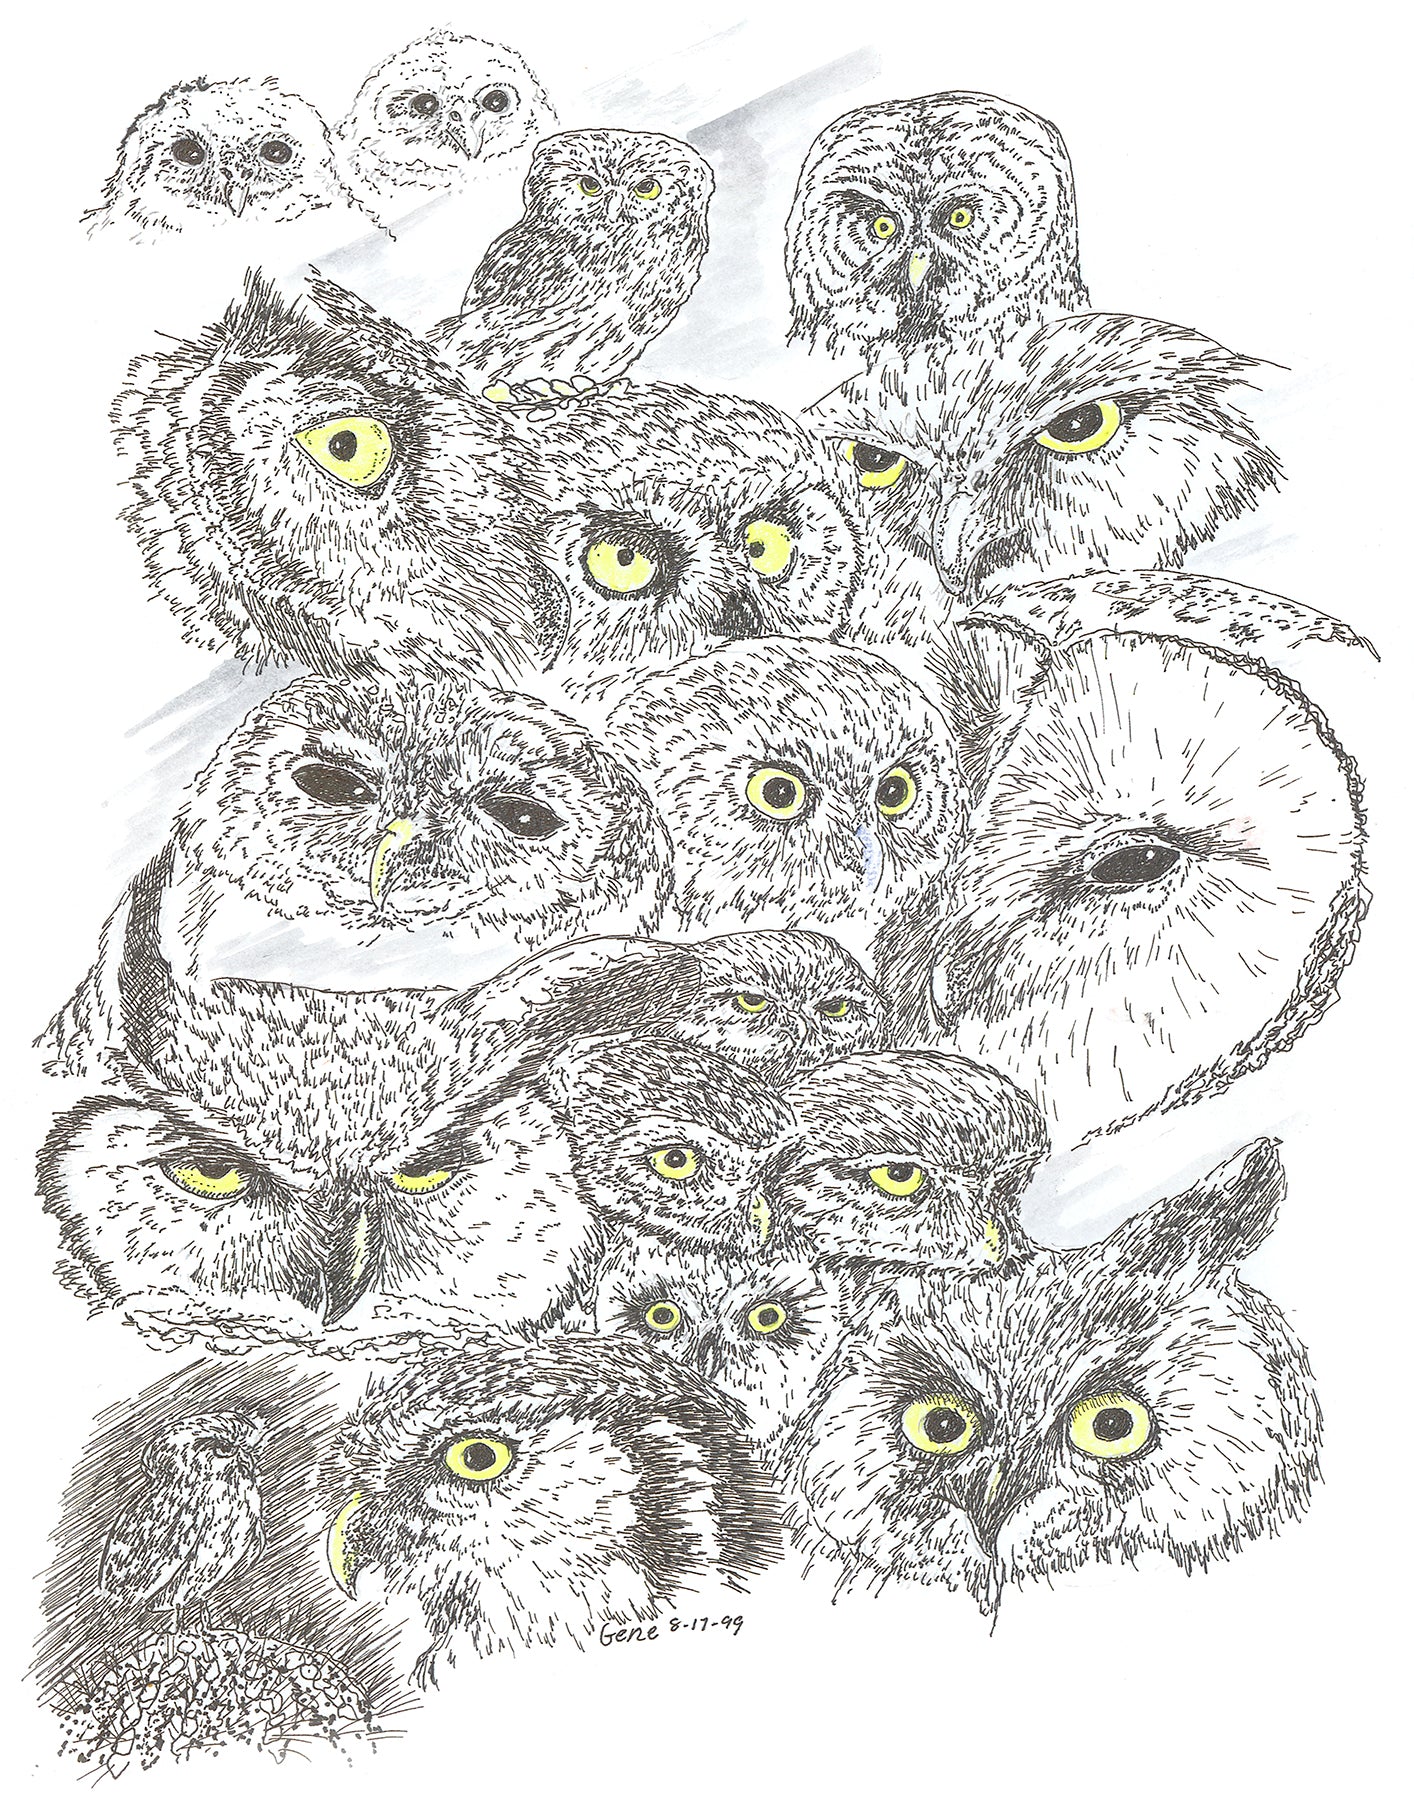 Owls Heads Collage - Gene's Pen & Ink